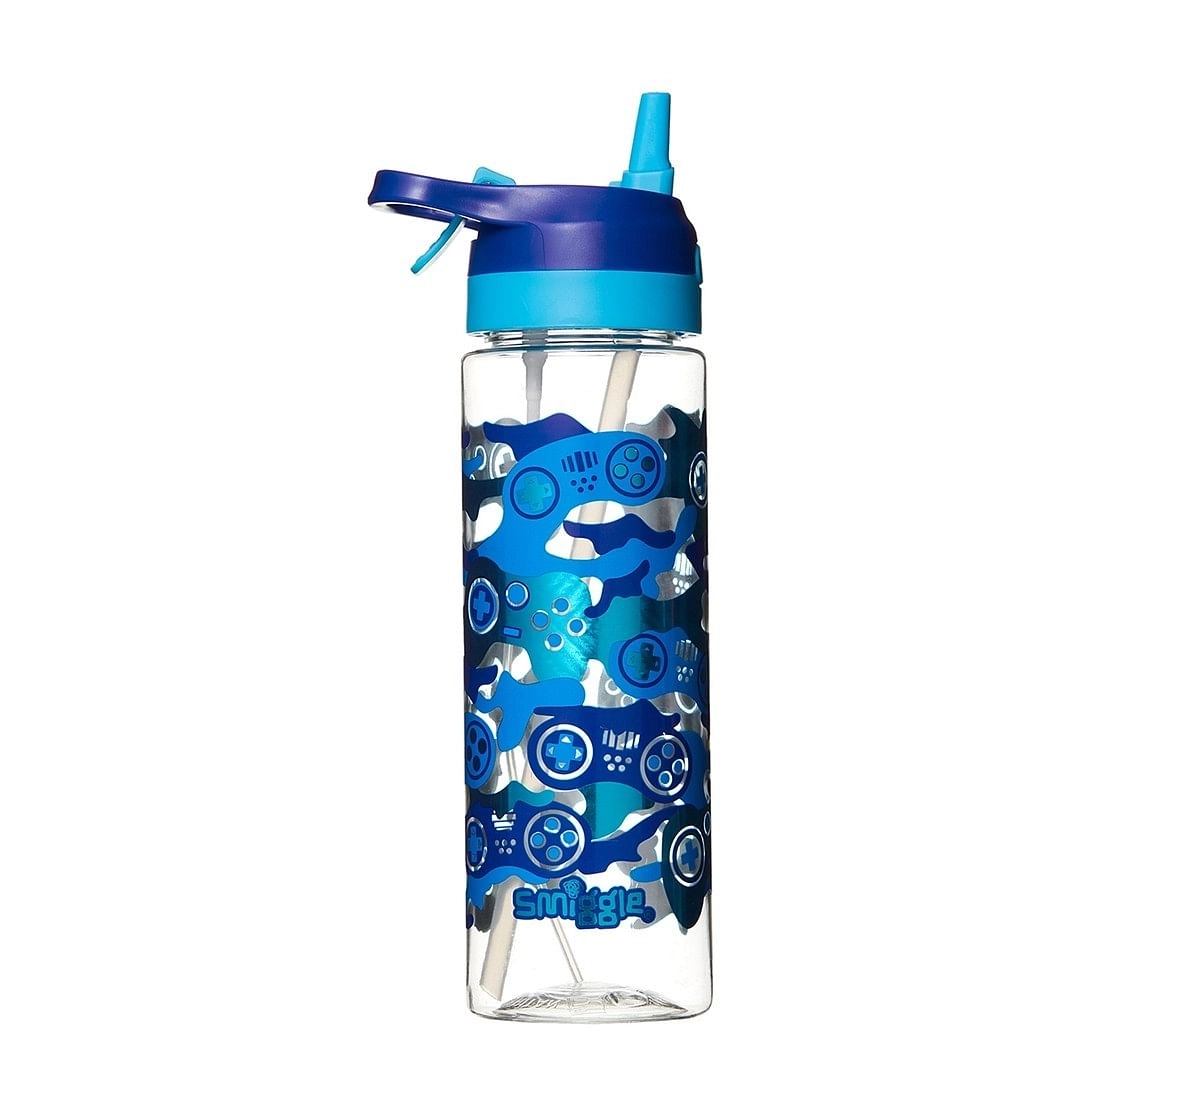 Smiggle Viva Spritz Bottle with Misting Function - Gaming Print Bags for Kids age 3Y+ (Cobalt Blue)